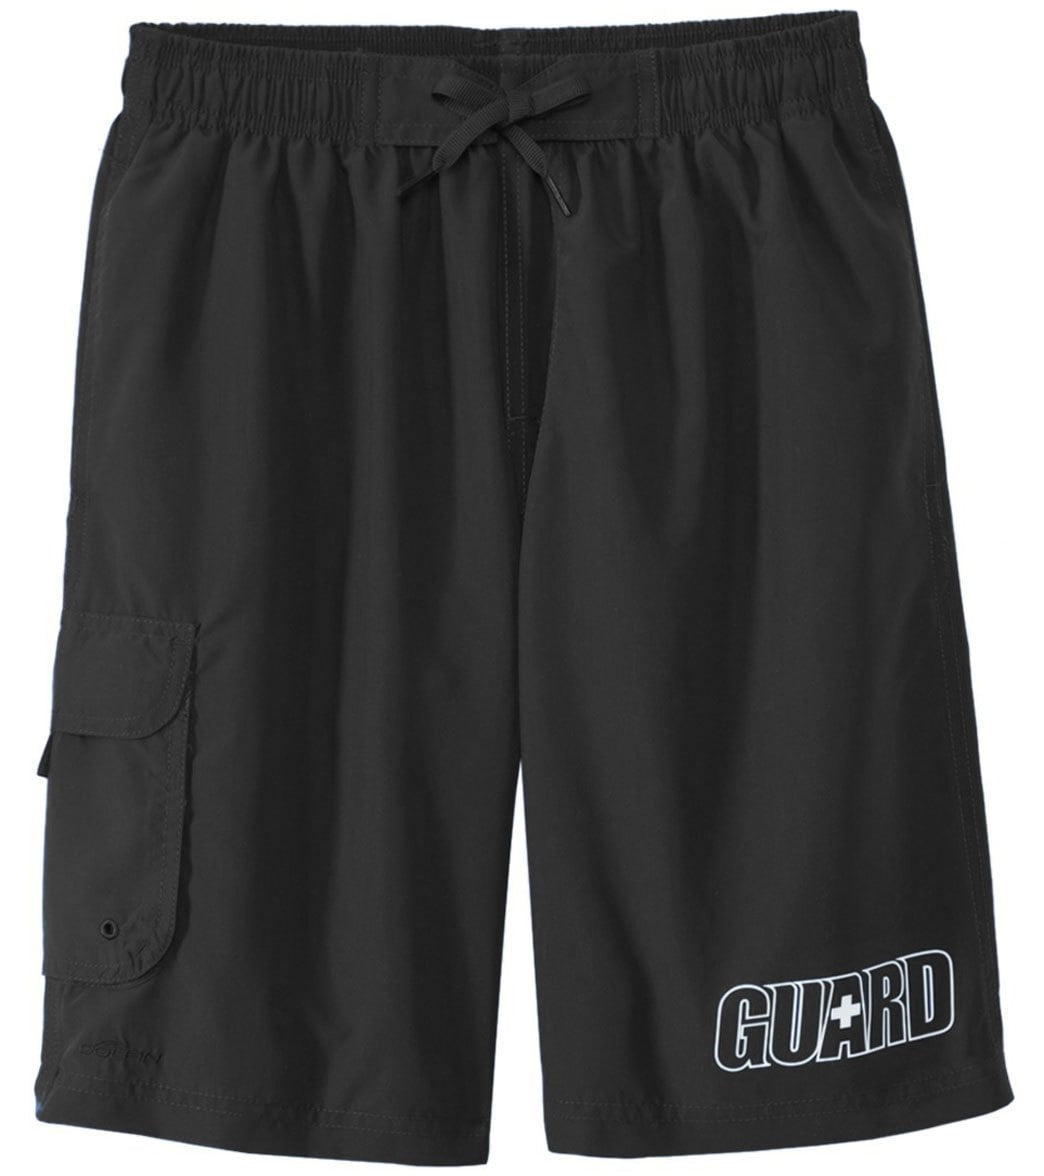 Dolfin Guard Board Short Swimsuit - Black Medium Polyester - Swimoutlet.com